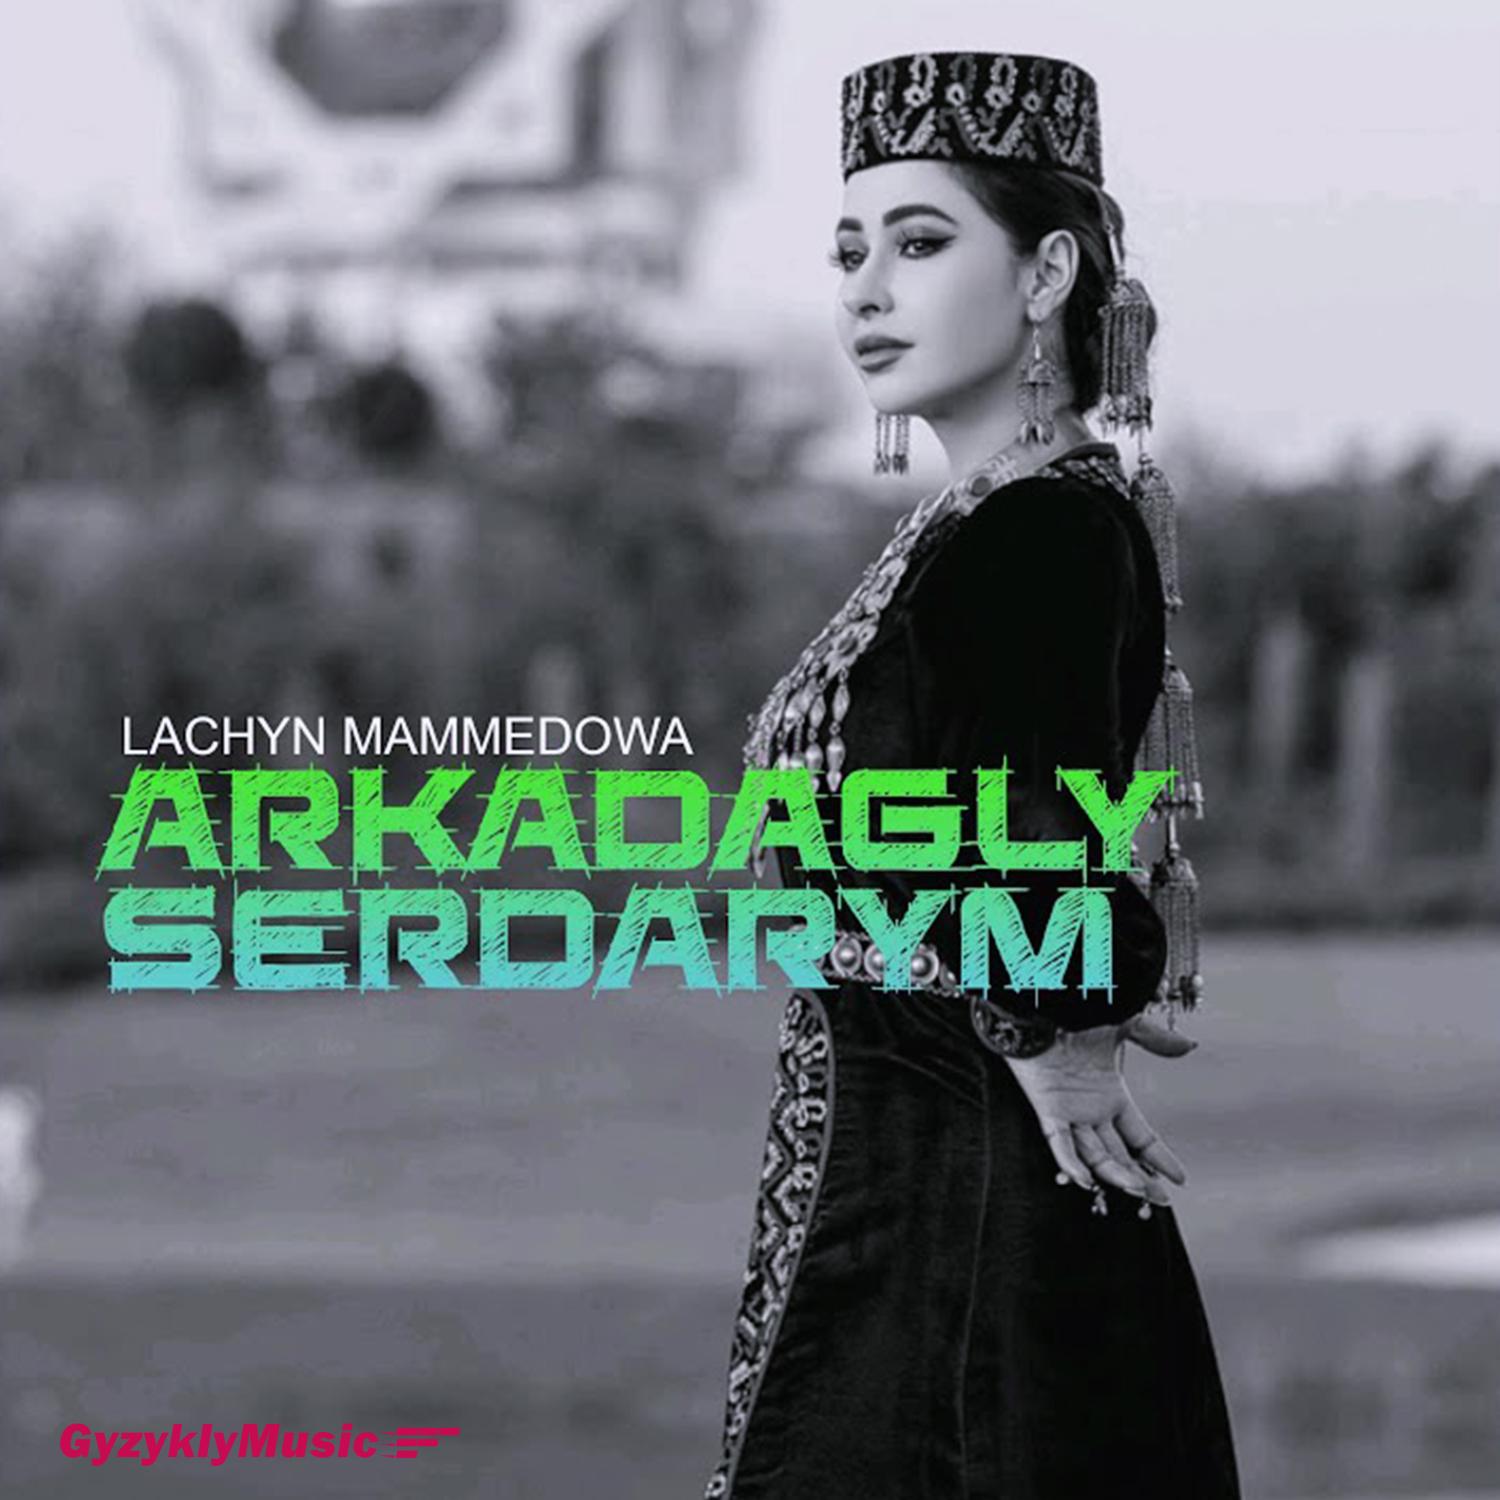 Постер альбома Arkadagly Serdarym